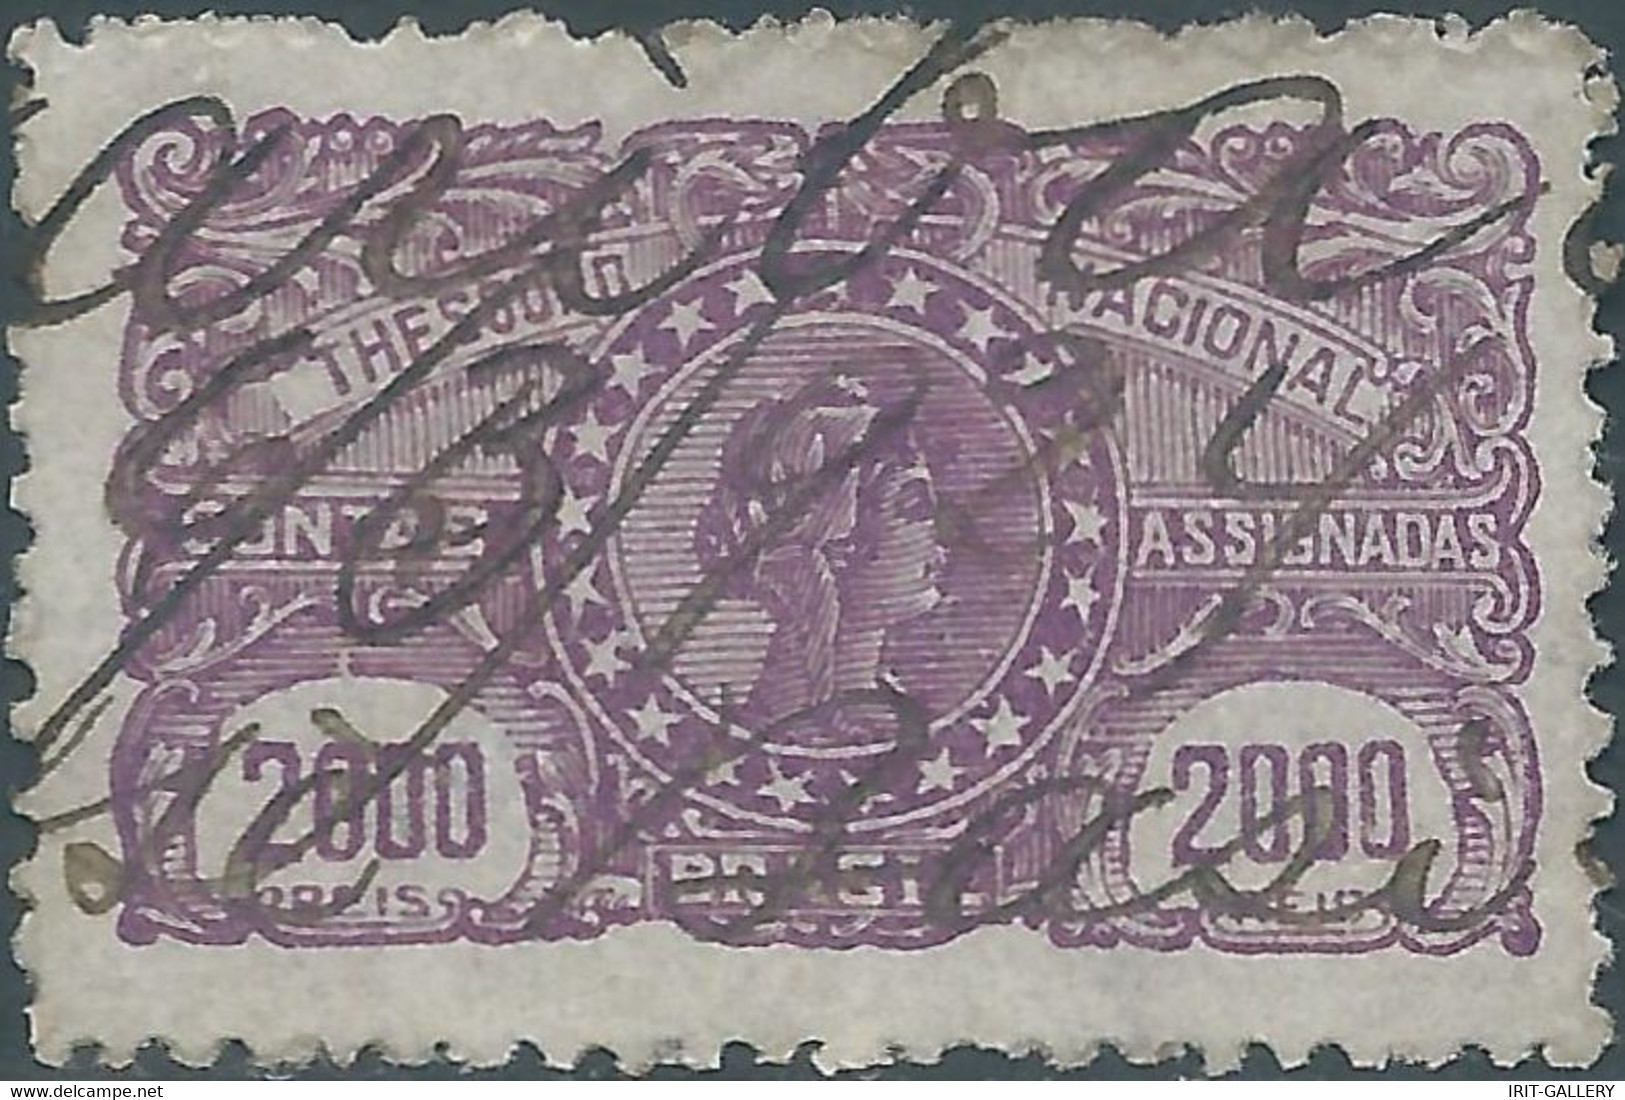 Brasil - Brasile - Brazil,1924 Revenue Stamp Tax Fiscal,STAMP DUTY,2000Rs,Used - Service